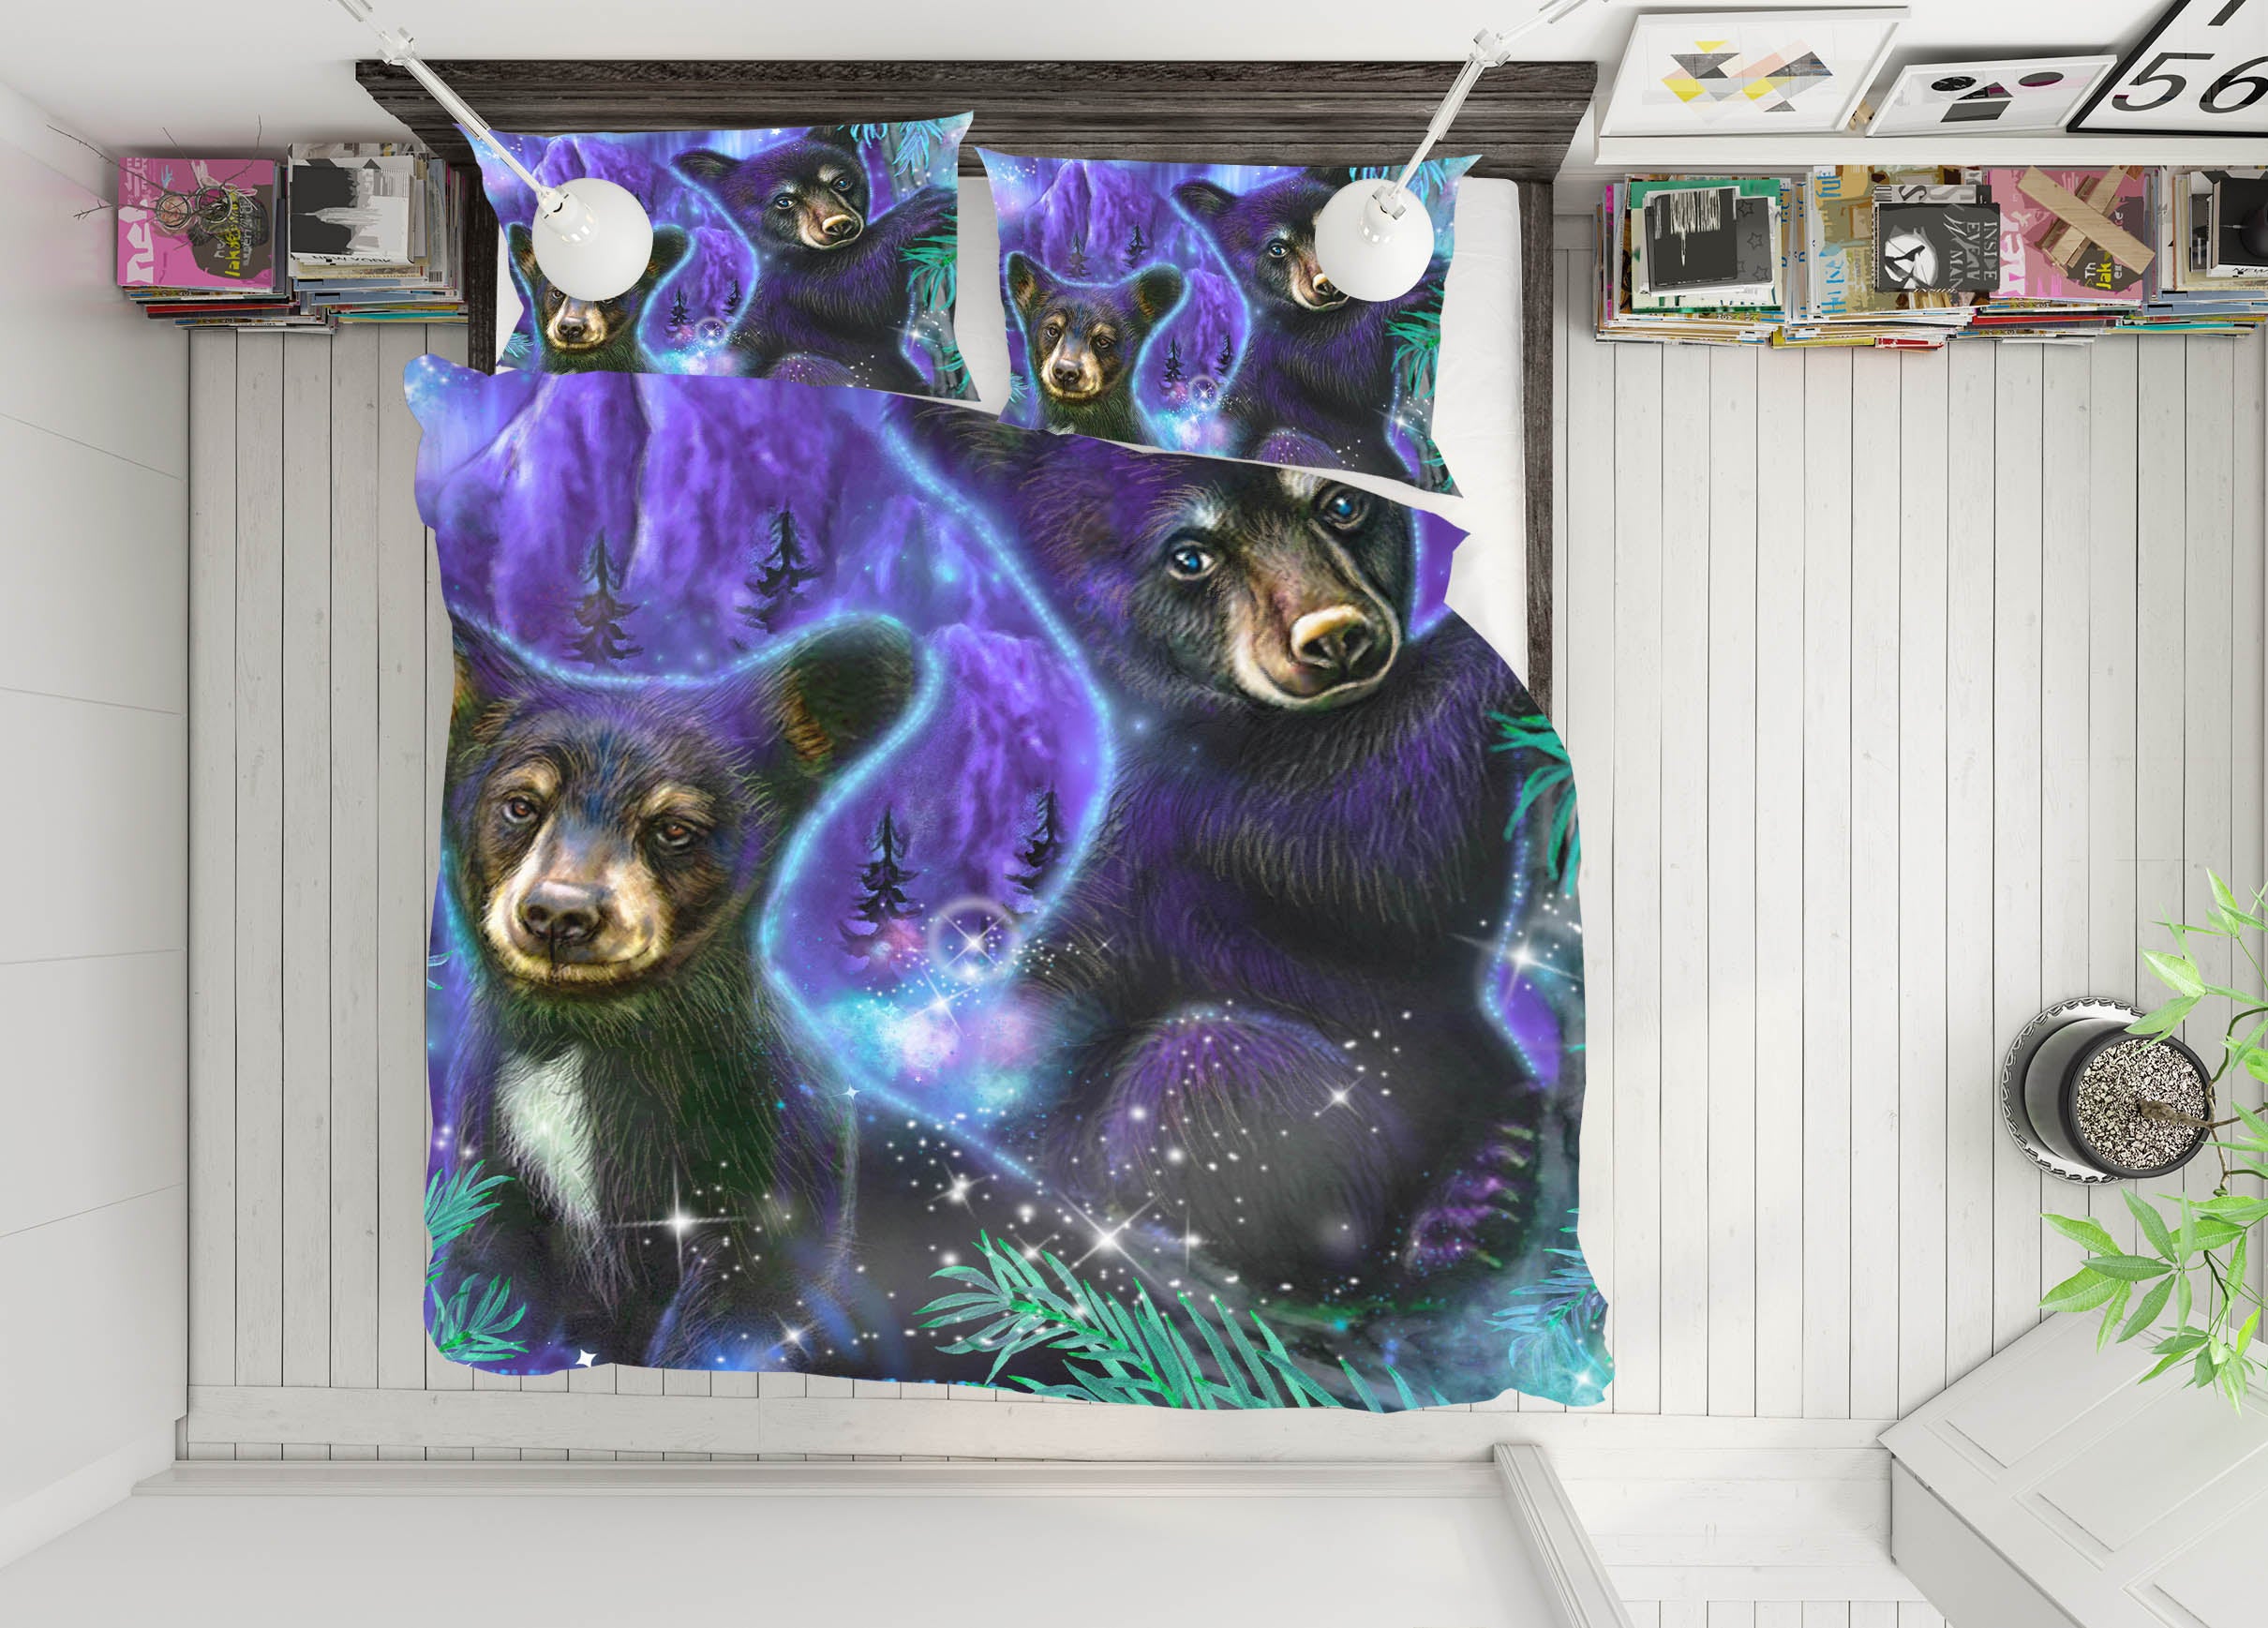 3D Baby Black Bear 8595 Sheena Pike Bedding Bed Pillowcases Quilt Cover Duvet Cover